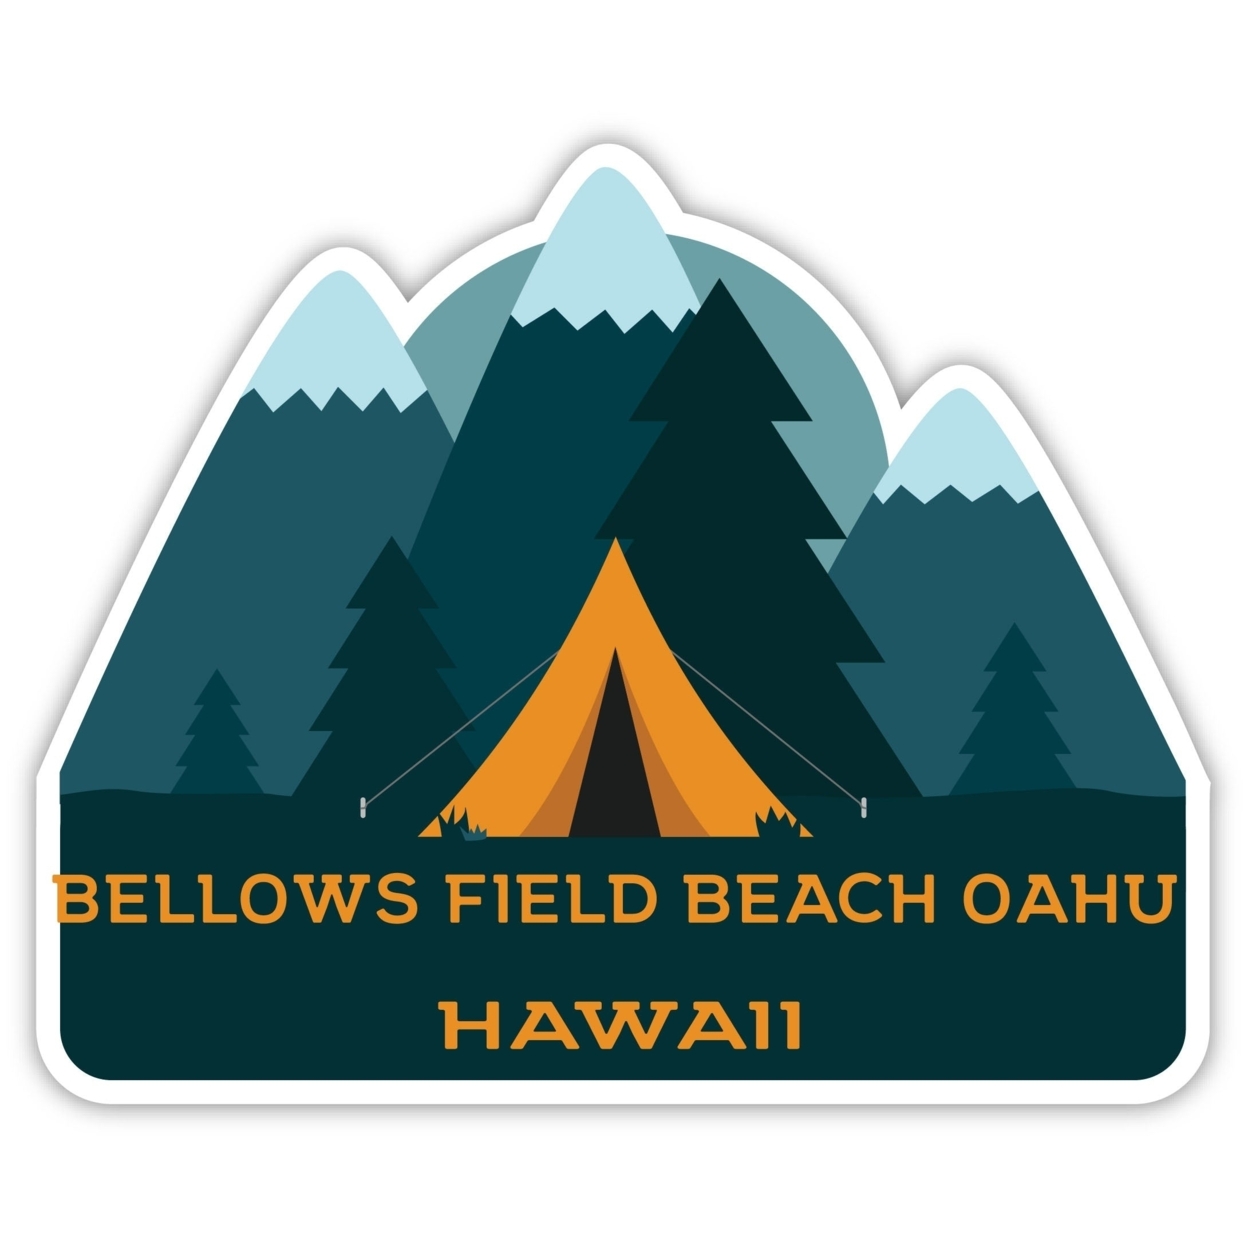 Bellows Field Beach Oahu Hawaii Souvenir Decorative Stickers (Choose Theme And Size) - Single Unit, 10-Inch, Tent